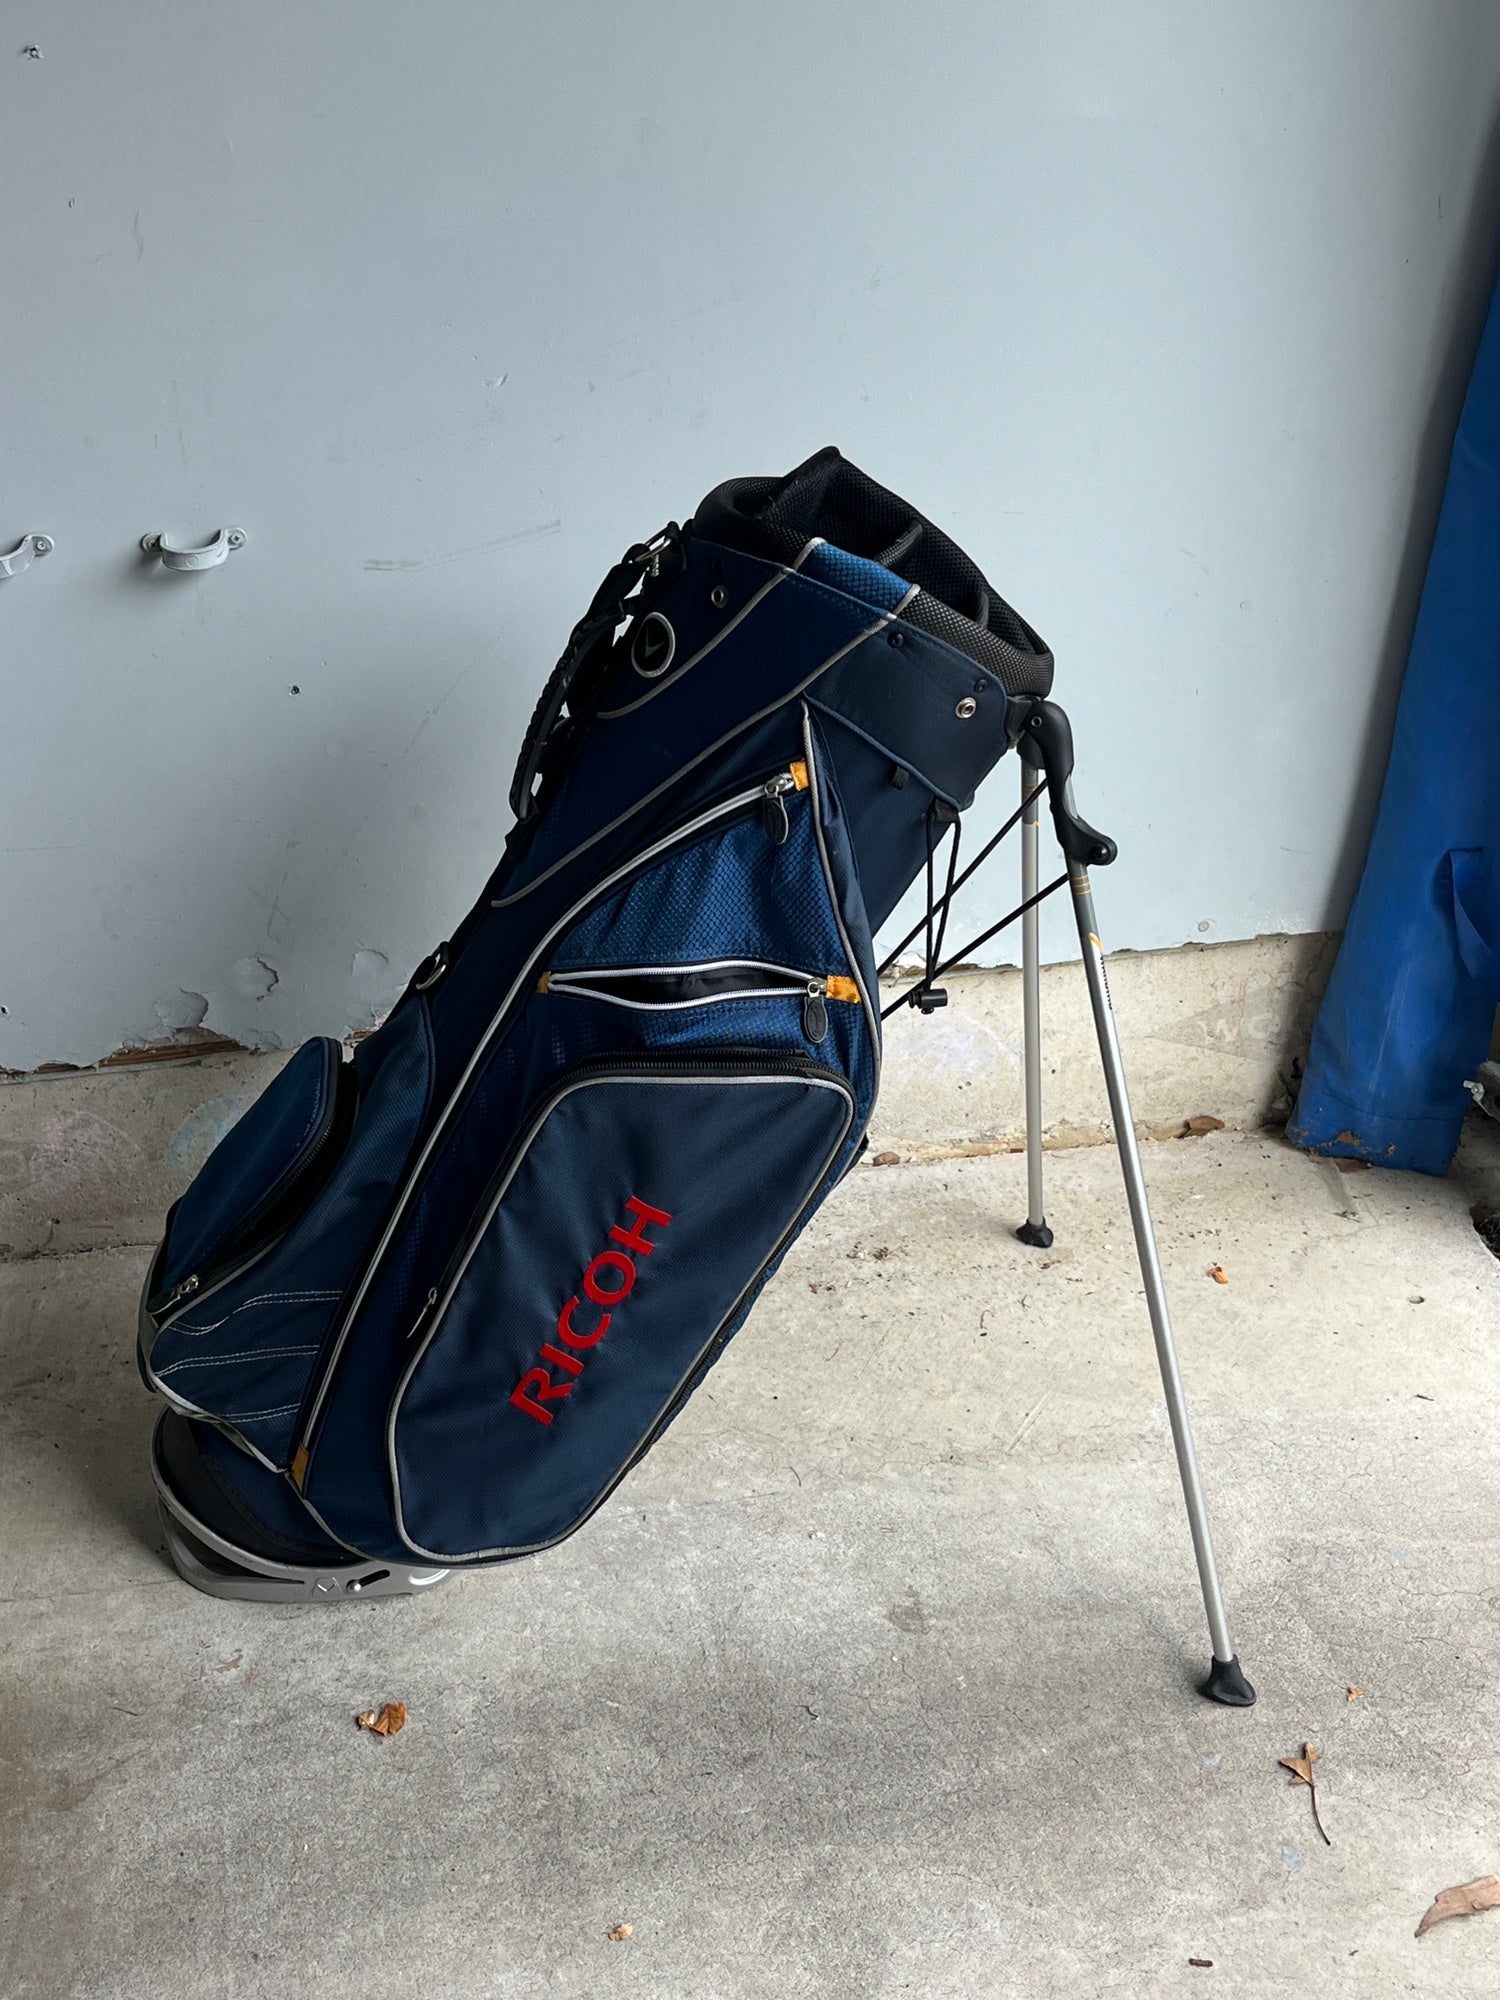 GolfWRX Classifieds Special Edition Jon Rahm game used golf bag  GolfWRX